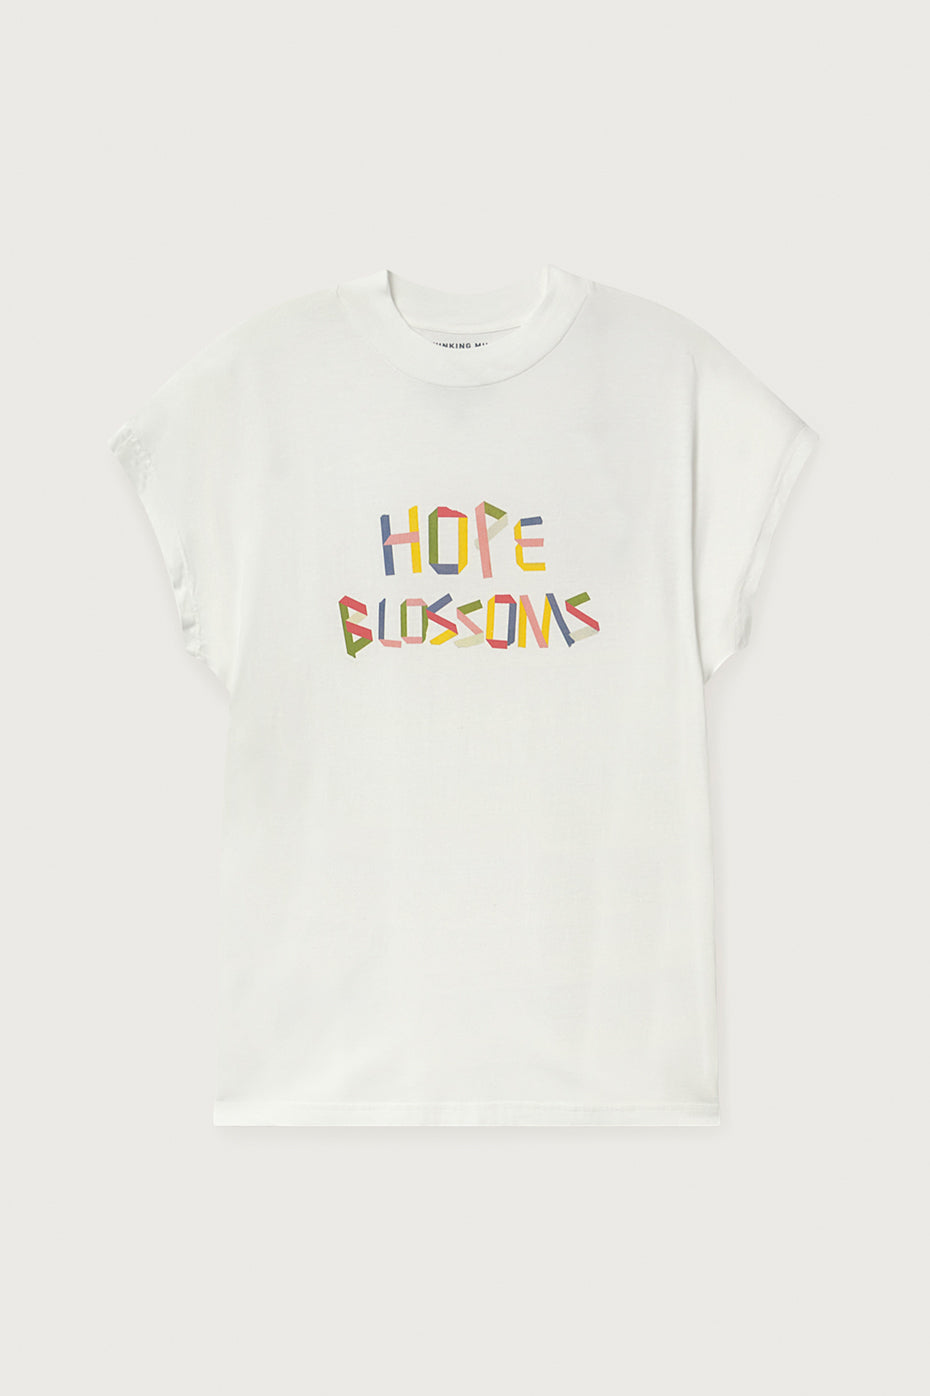 Snow White Hope Blossoms T-Shirt